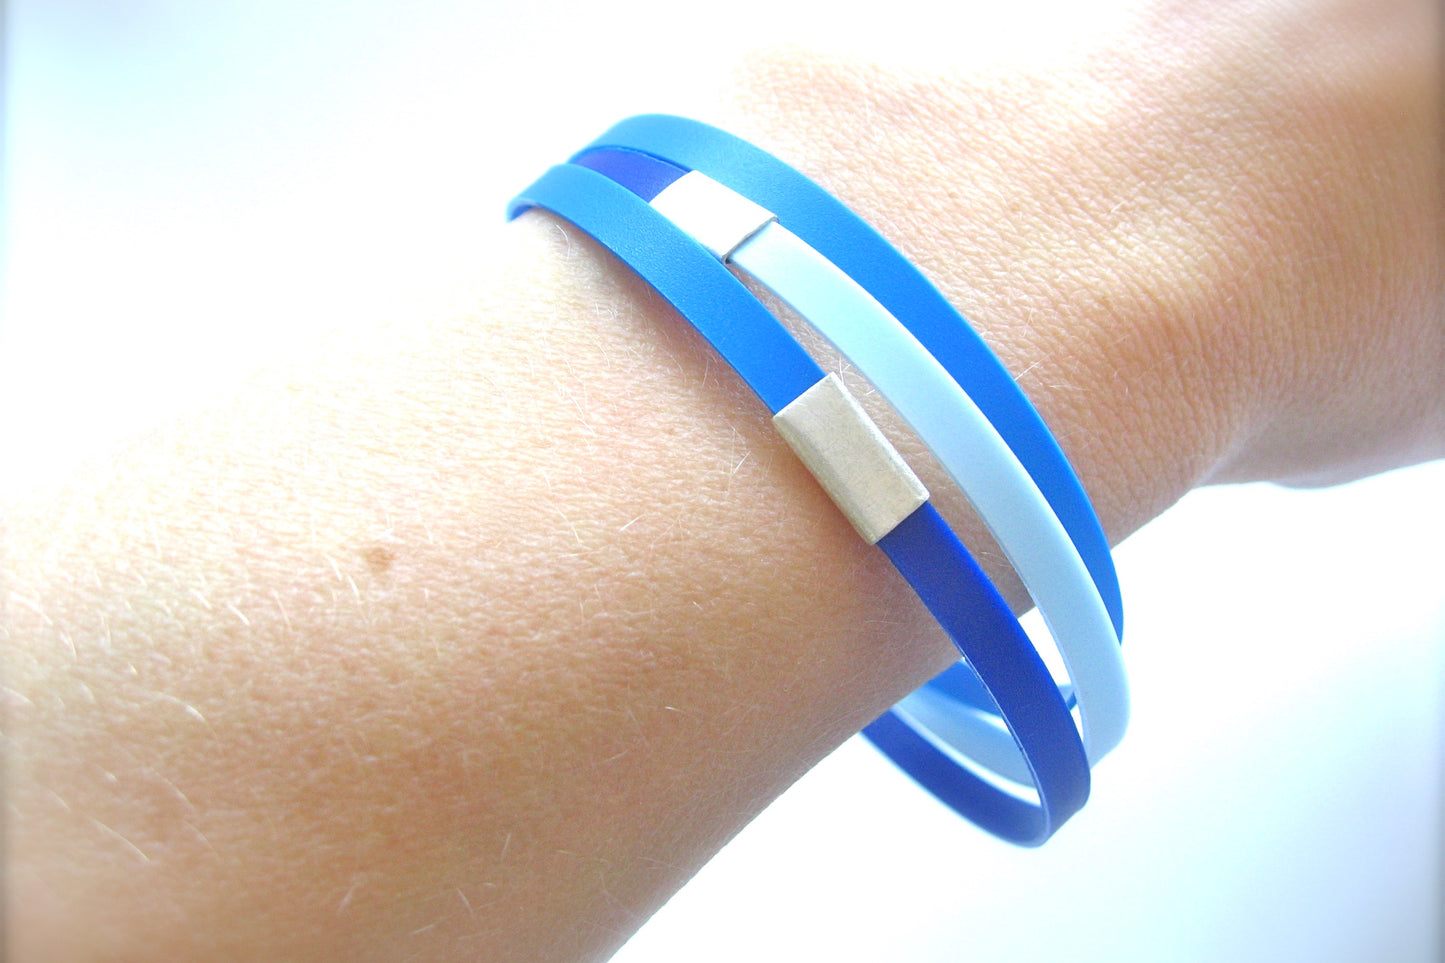 maritime blue bracelet sterling silver and polypropylene